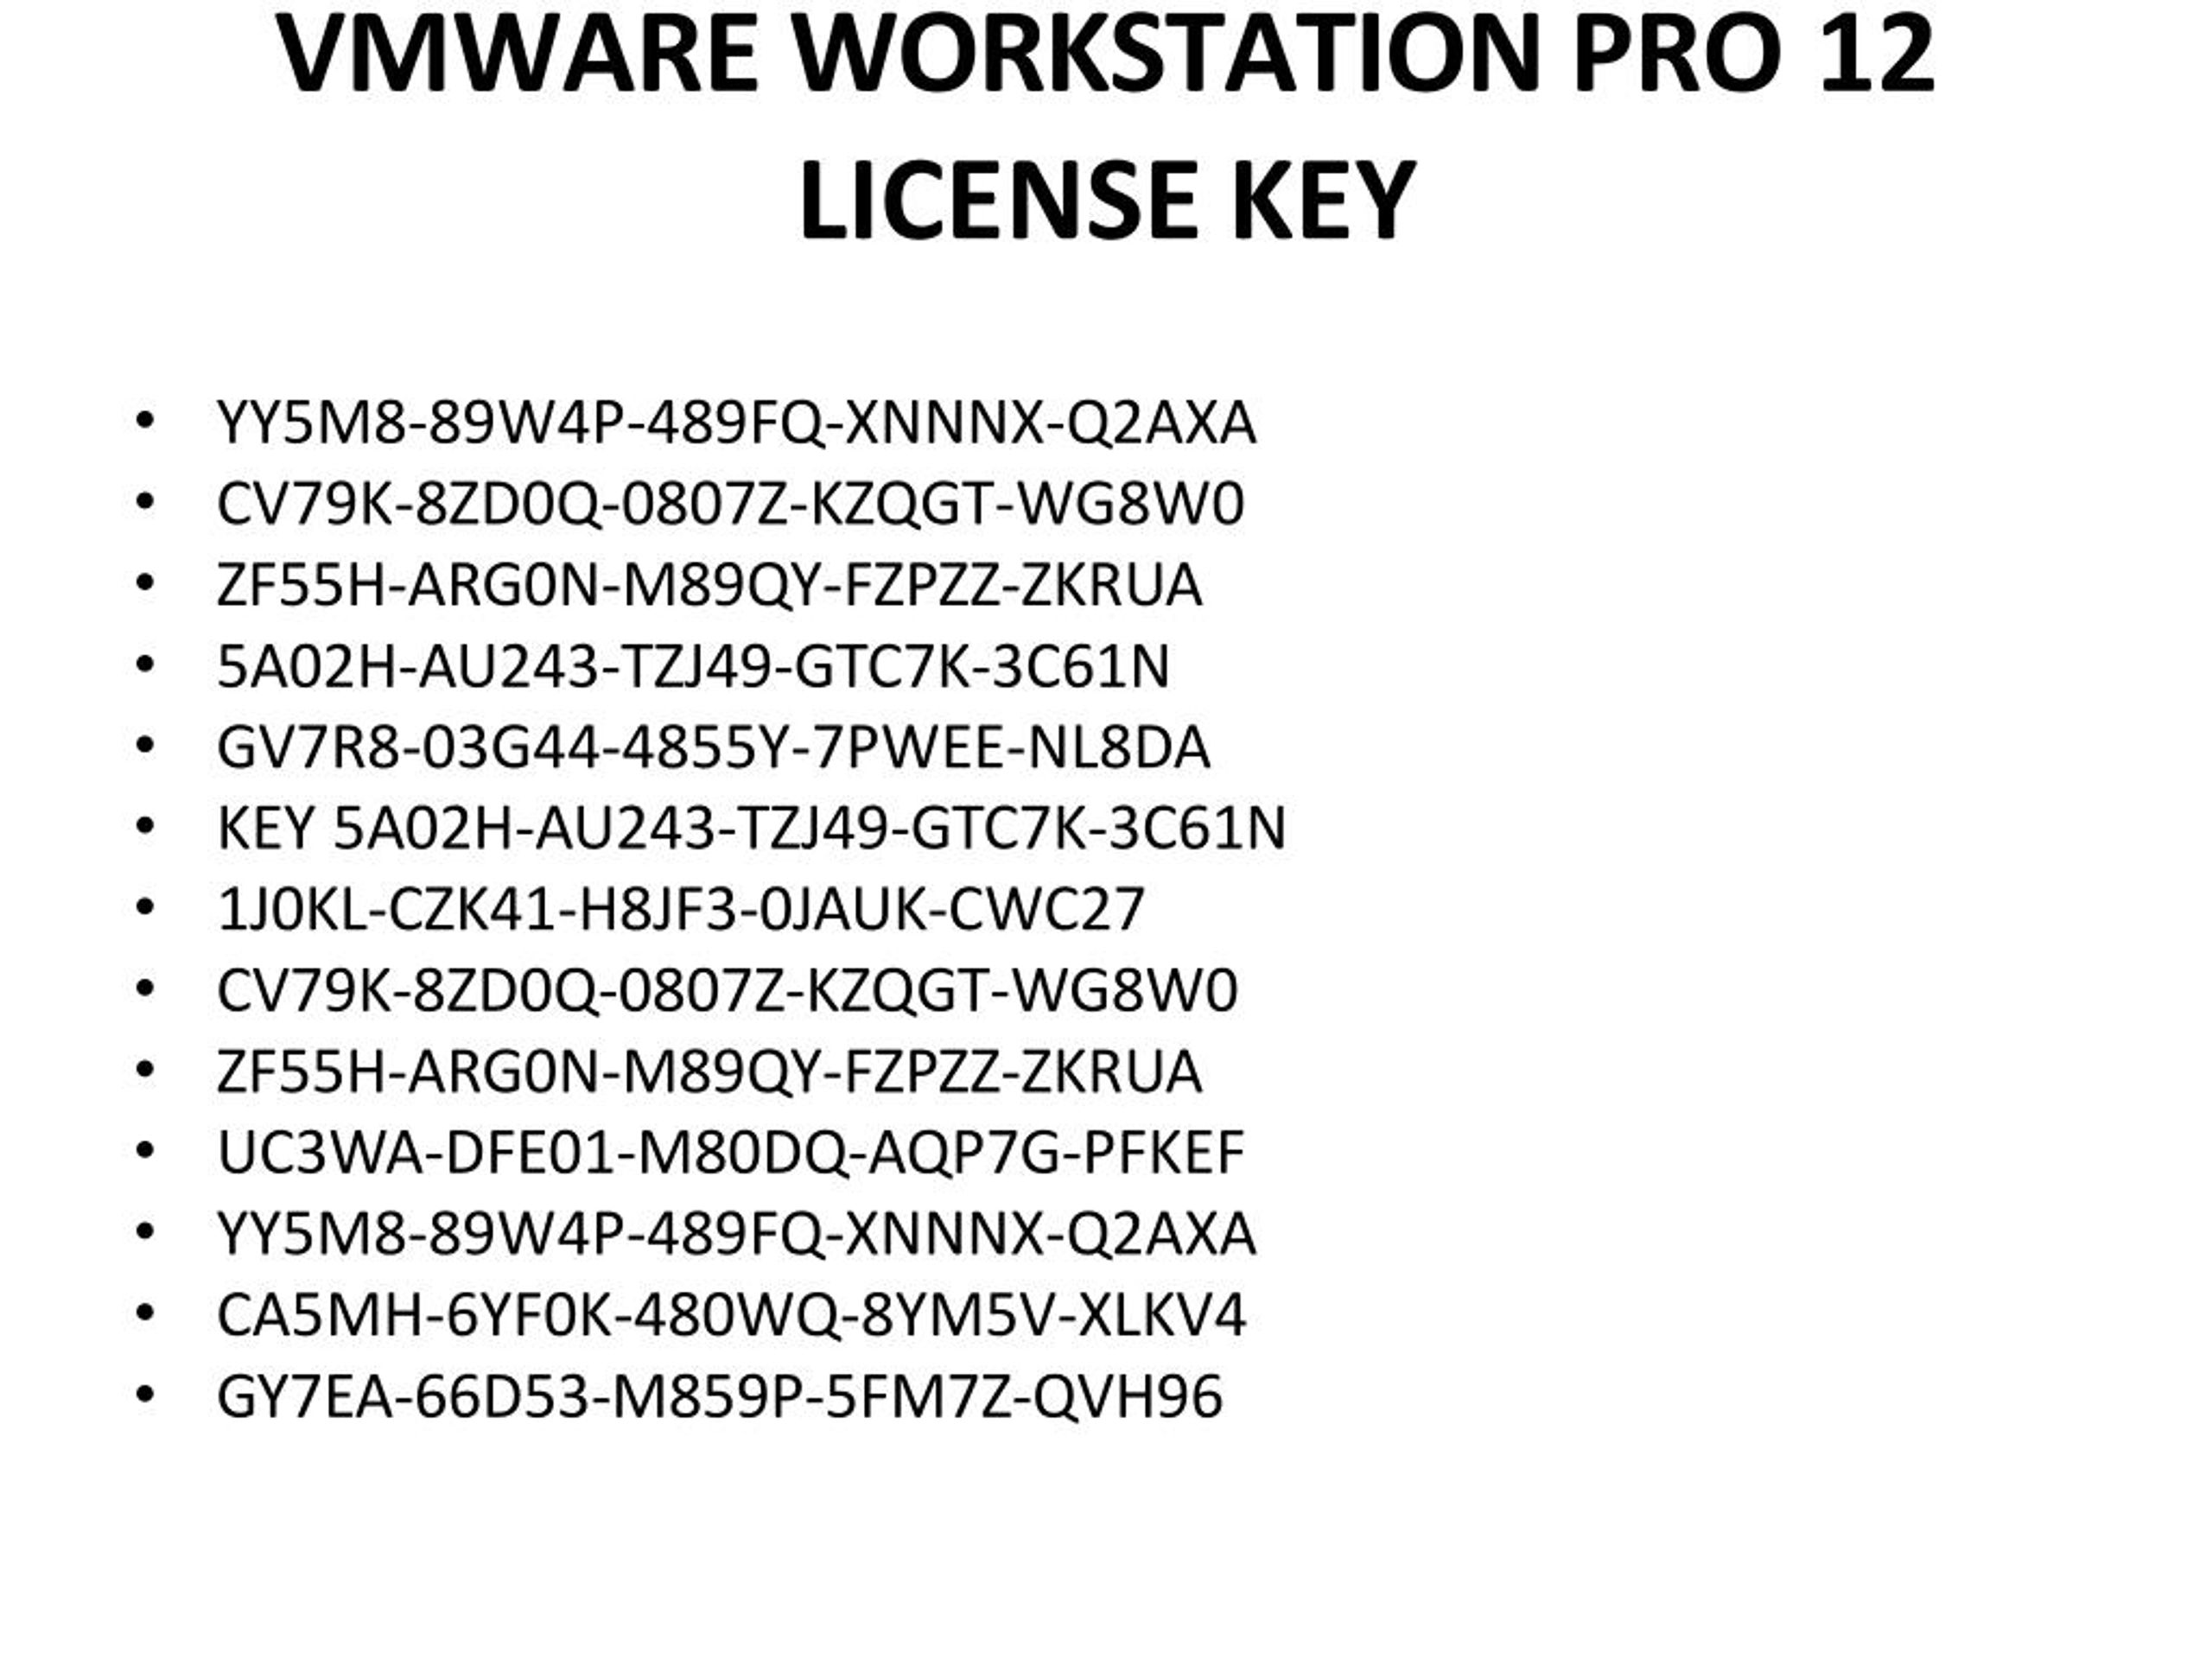 vmware workstation 12 license key